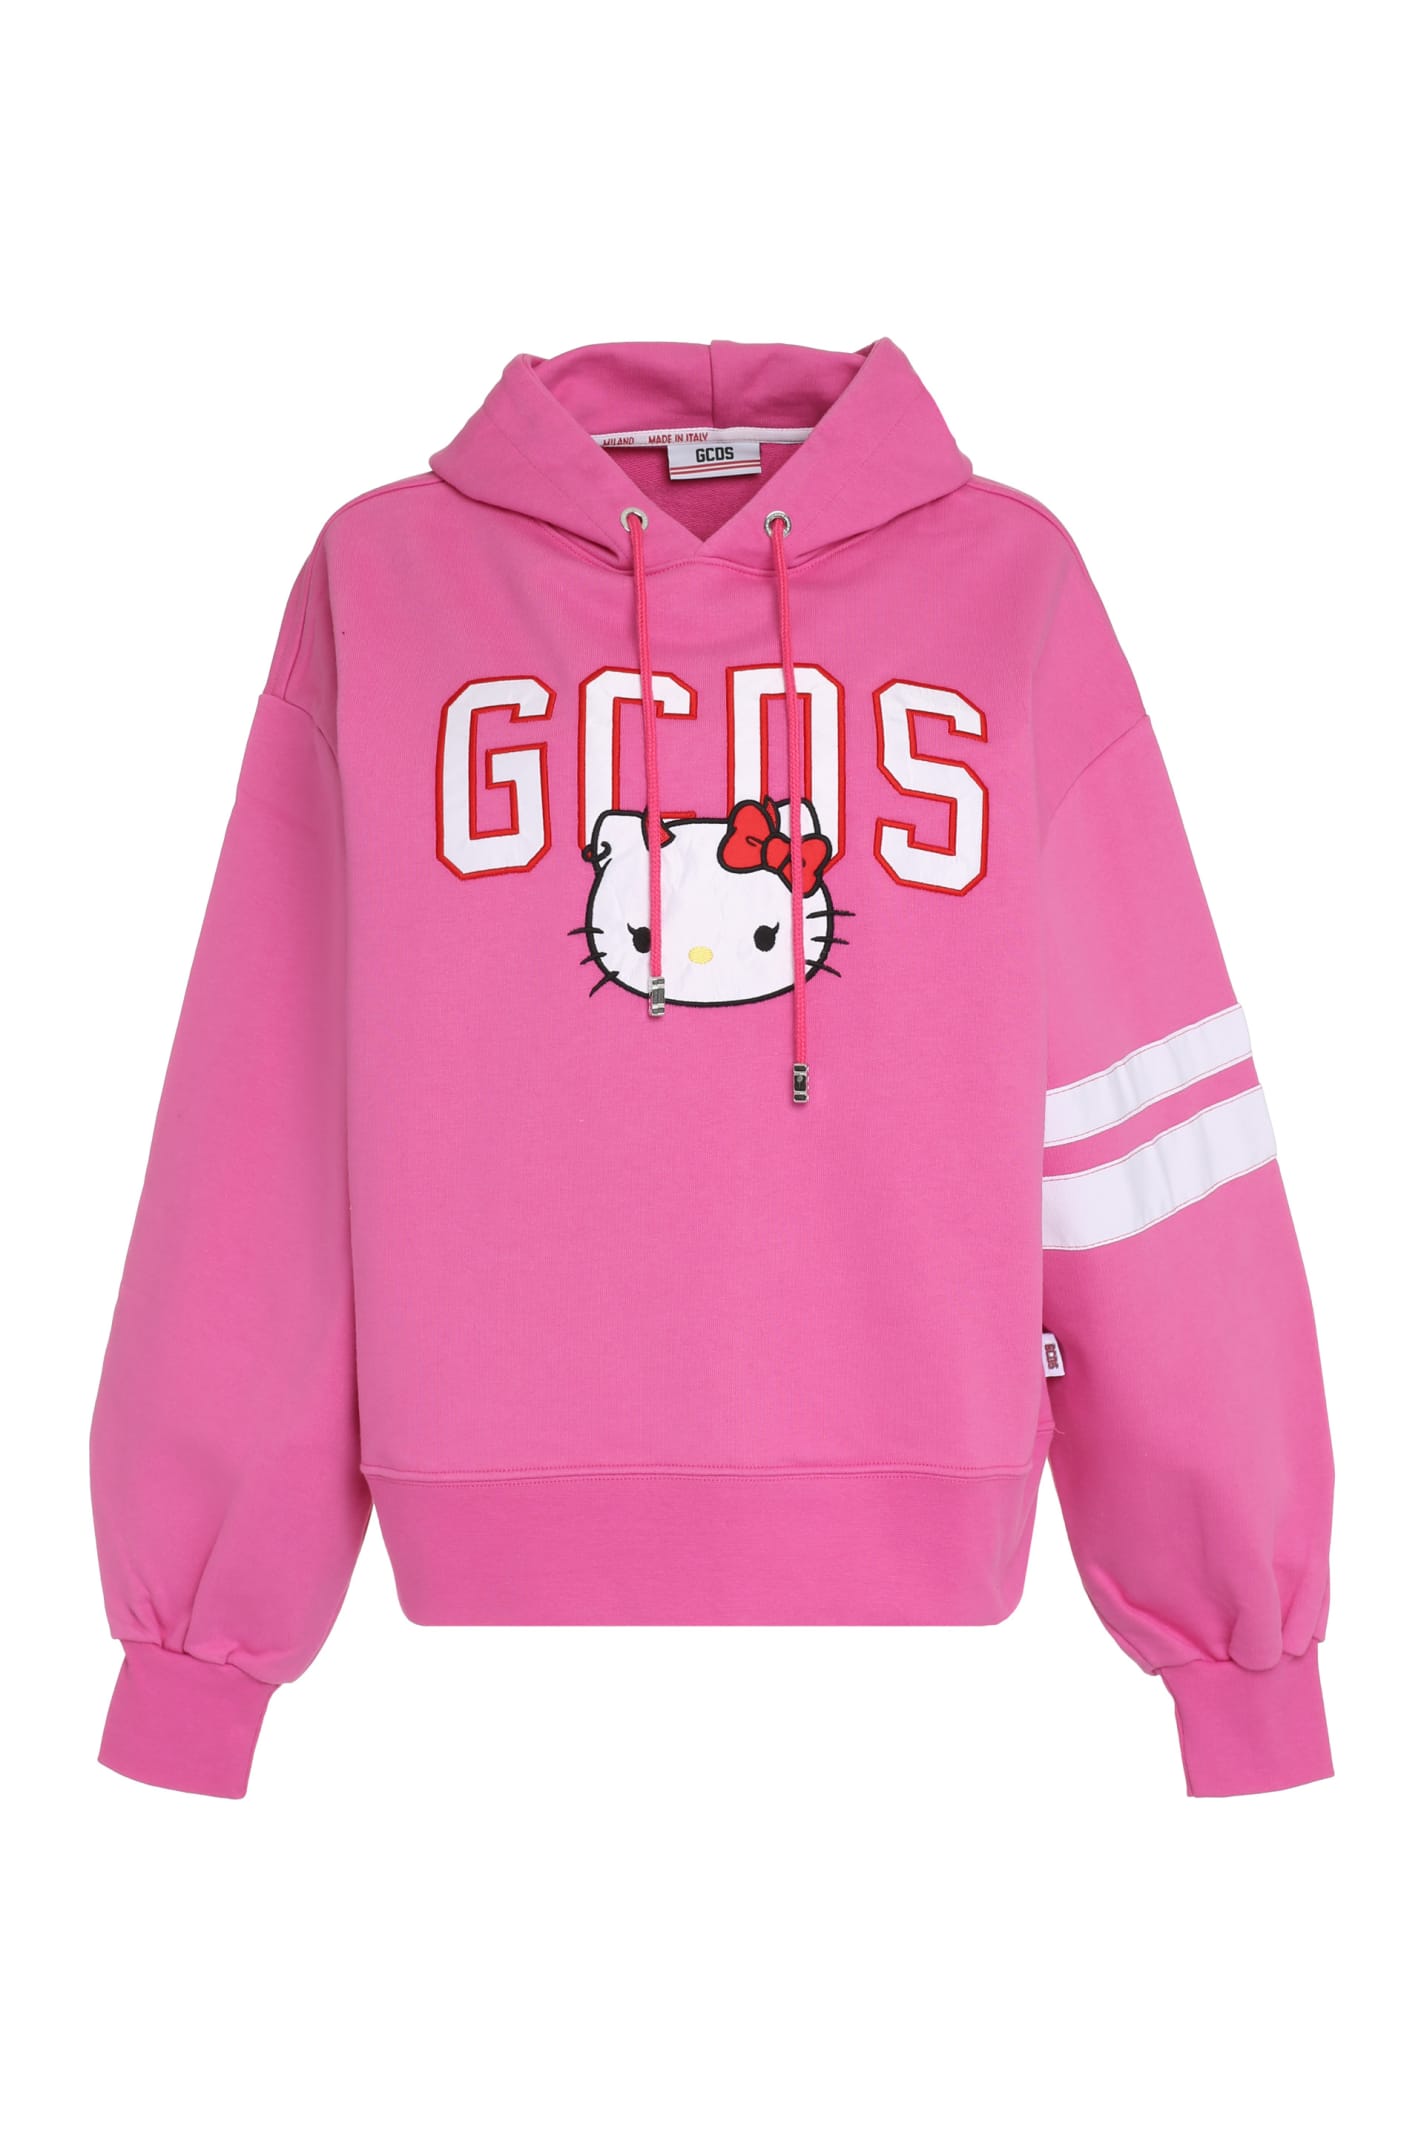 Gcds X Hello Kitty - Hooded Sweatshirt